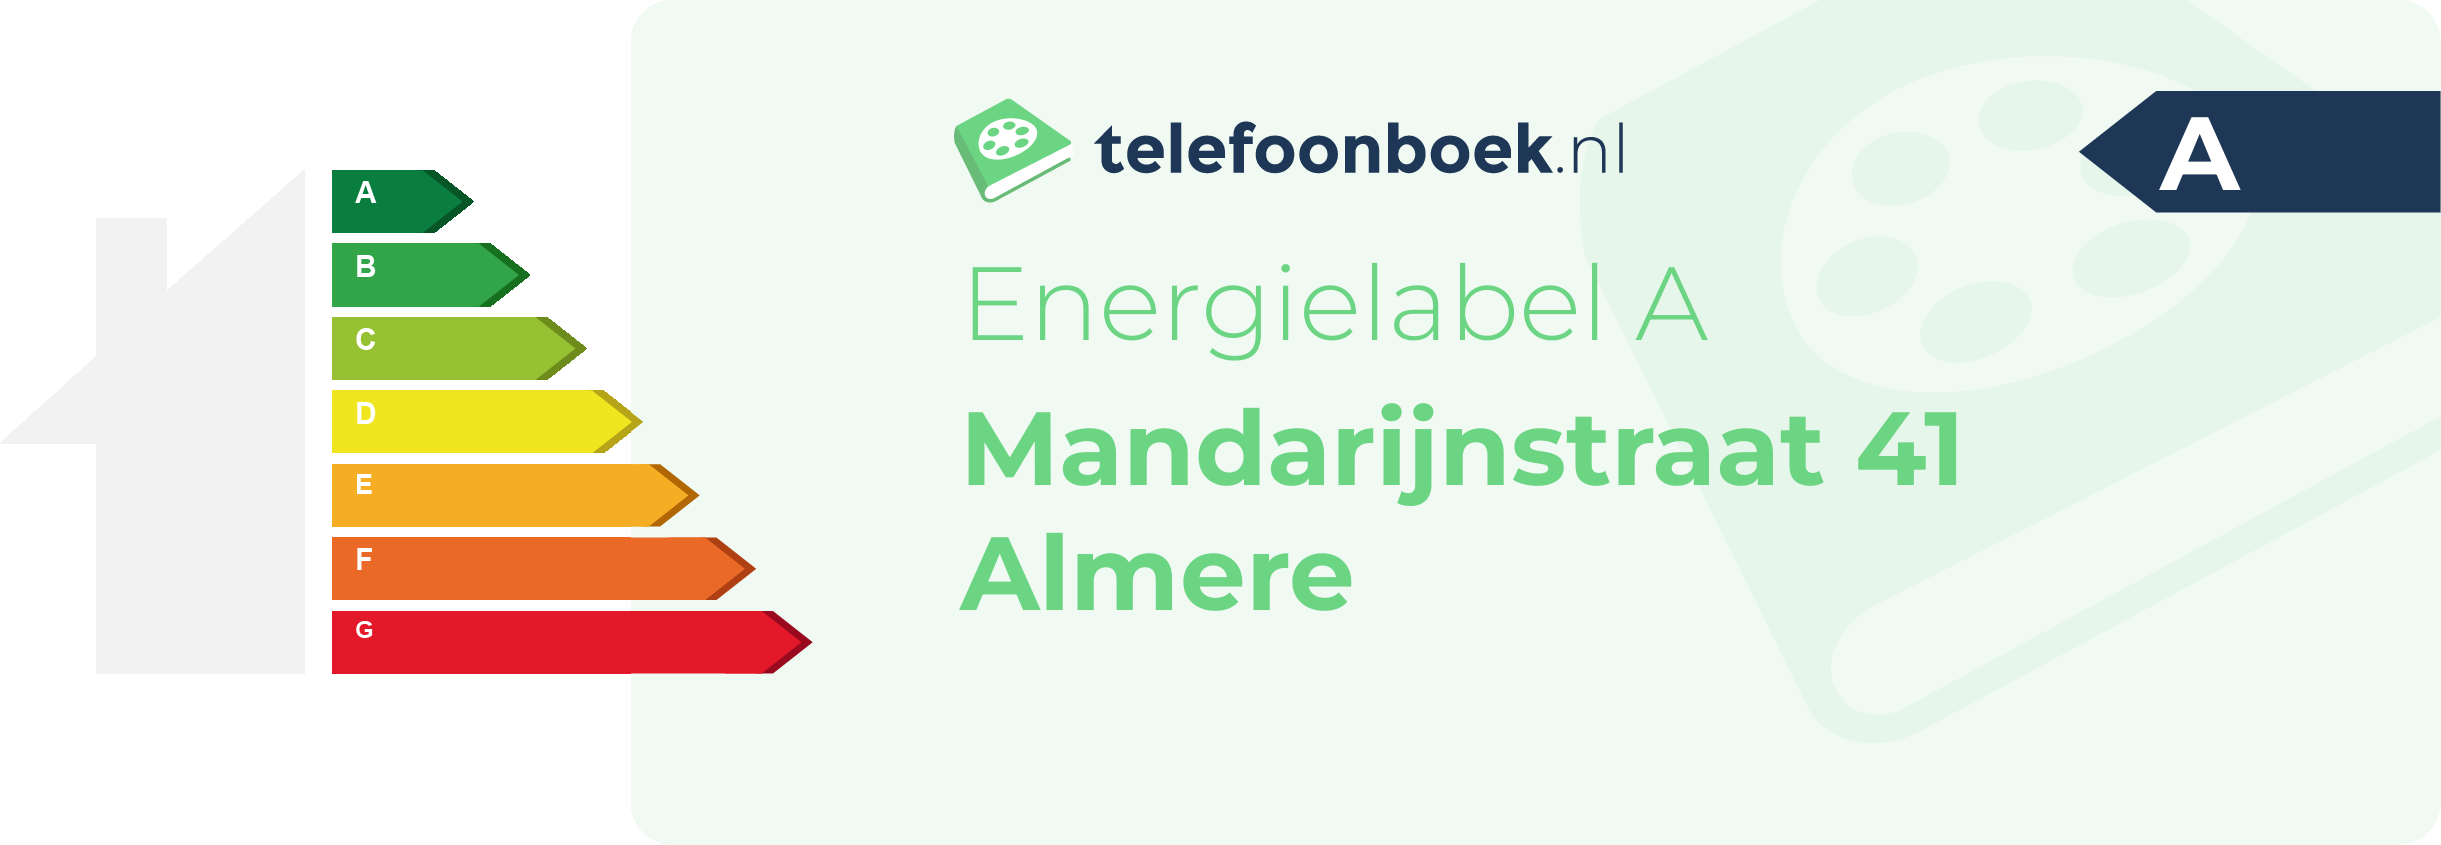 Energielabel Mandarijnstraat 41 Almere